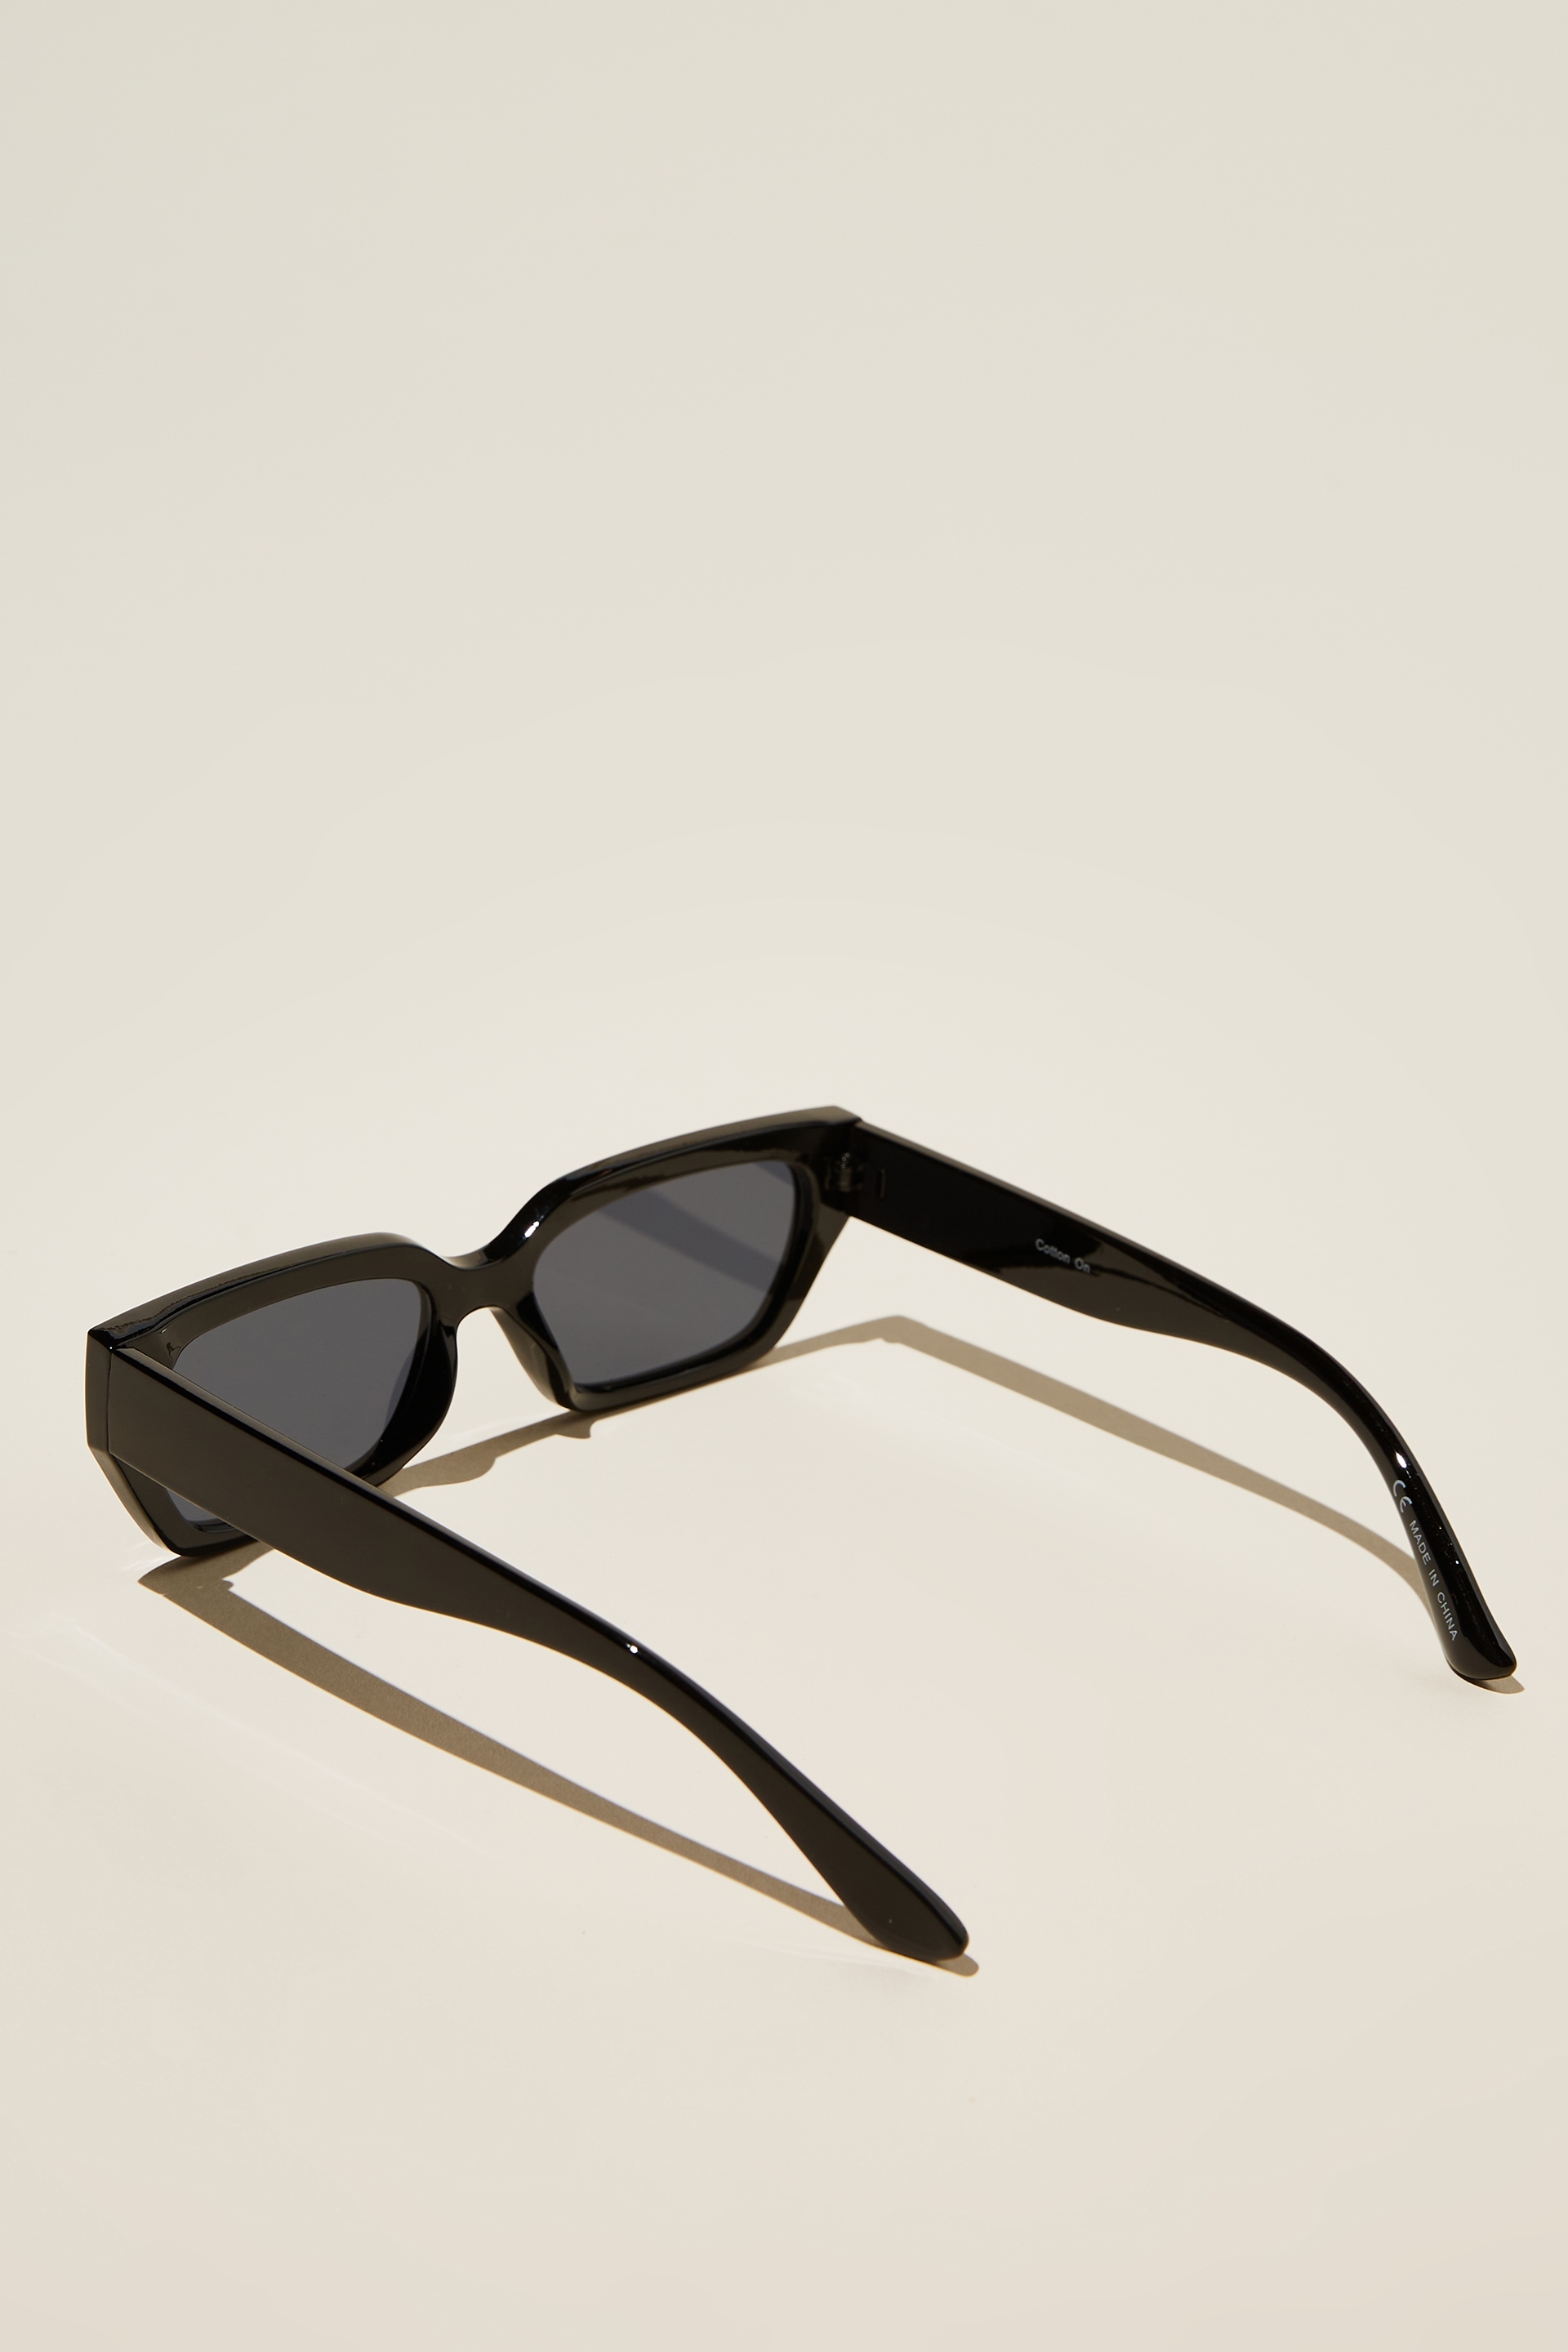 Kith x Oakley Razor Blade Sunglasses Navy/Yellow Men's - FW18 - GB